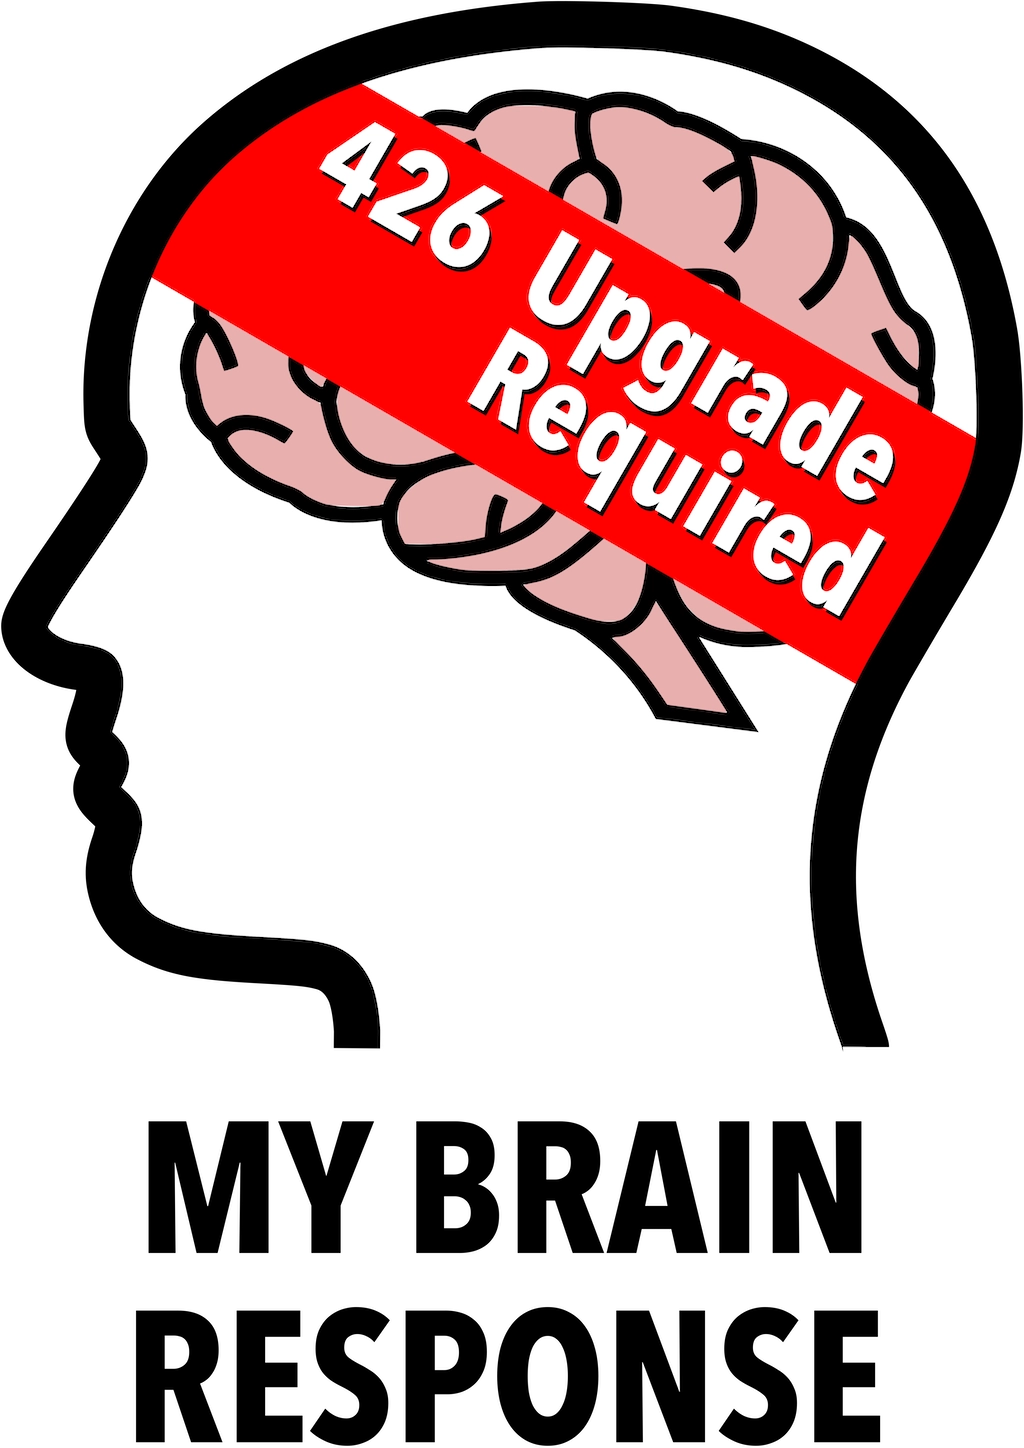 My Brain Response: 426 Upgrade Required